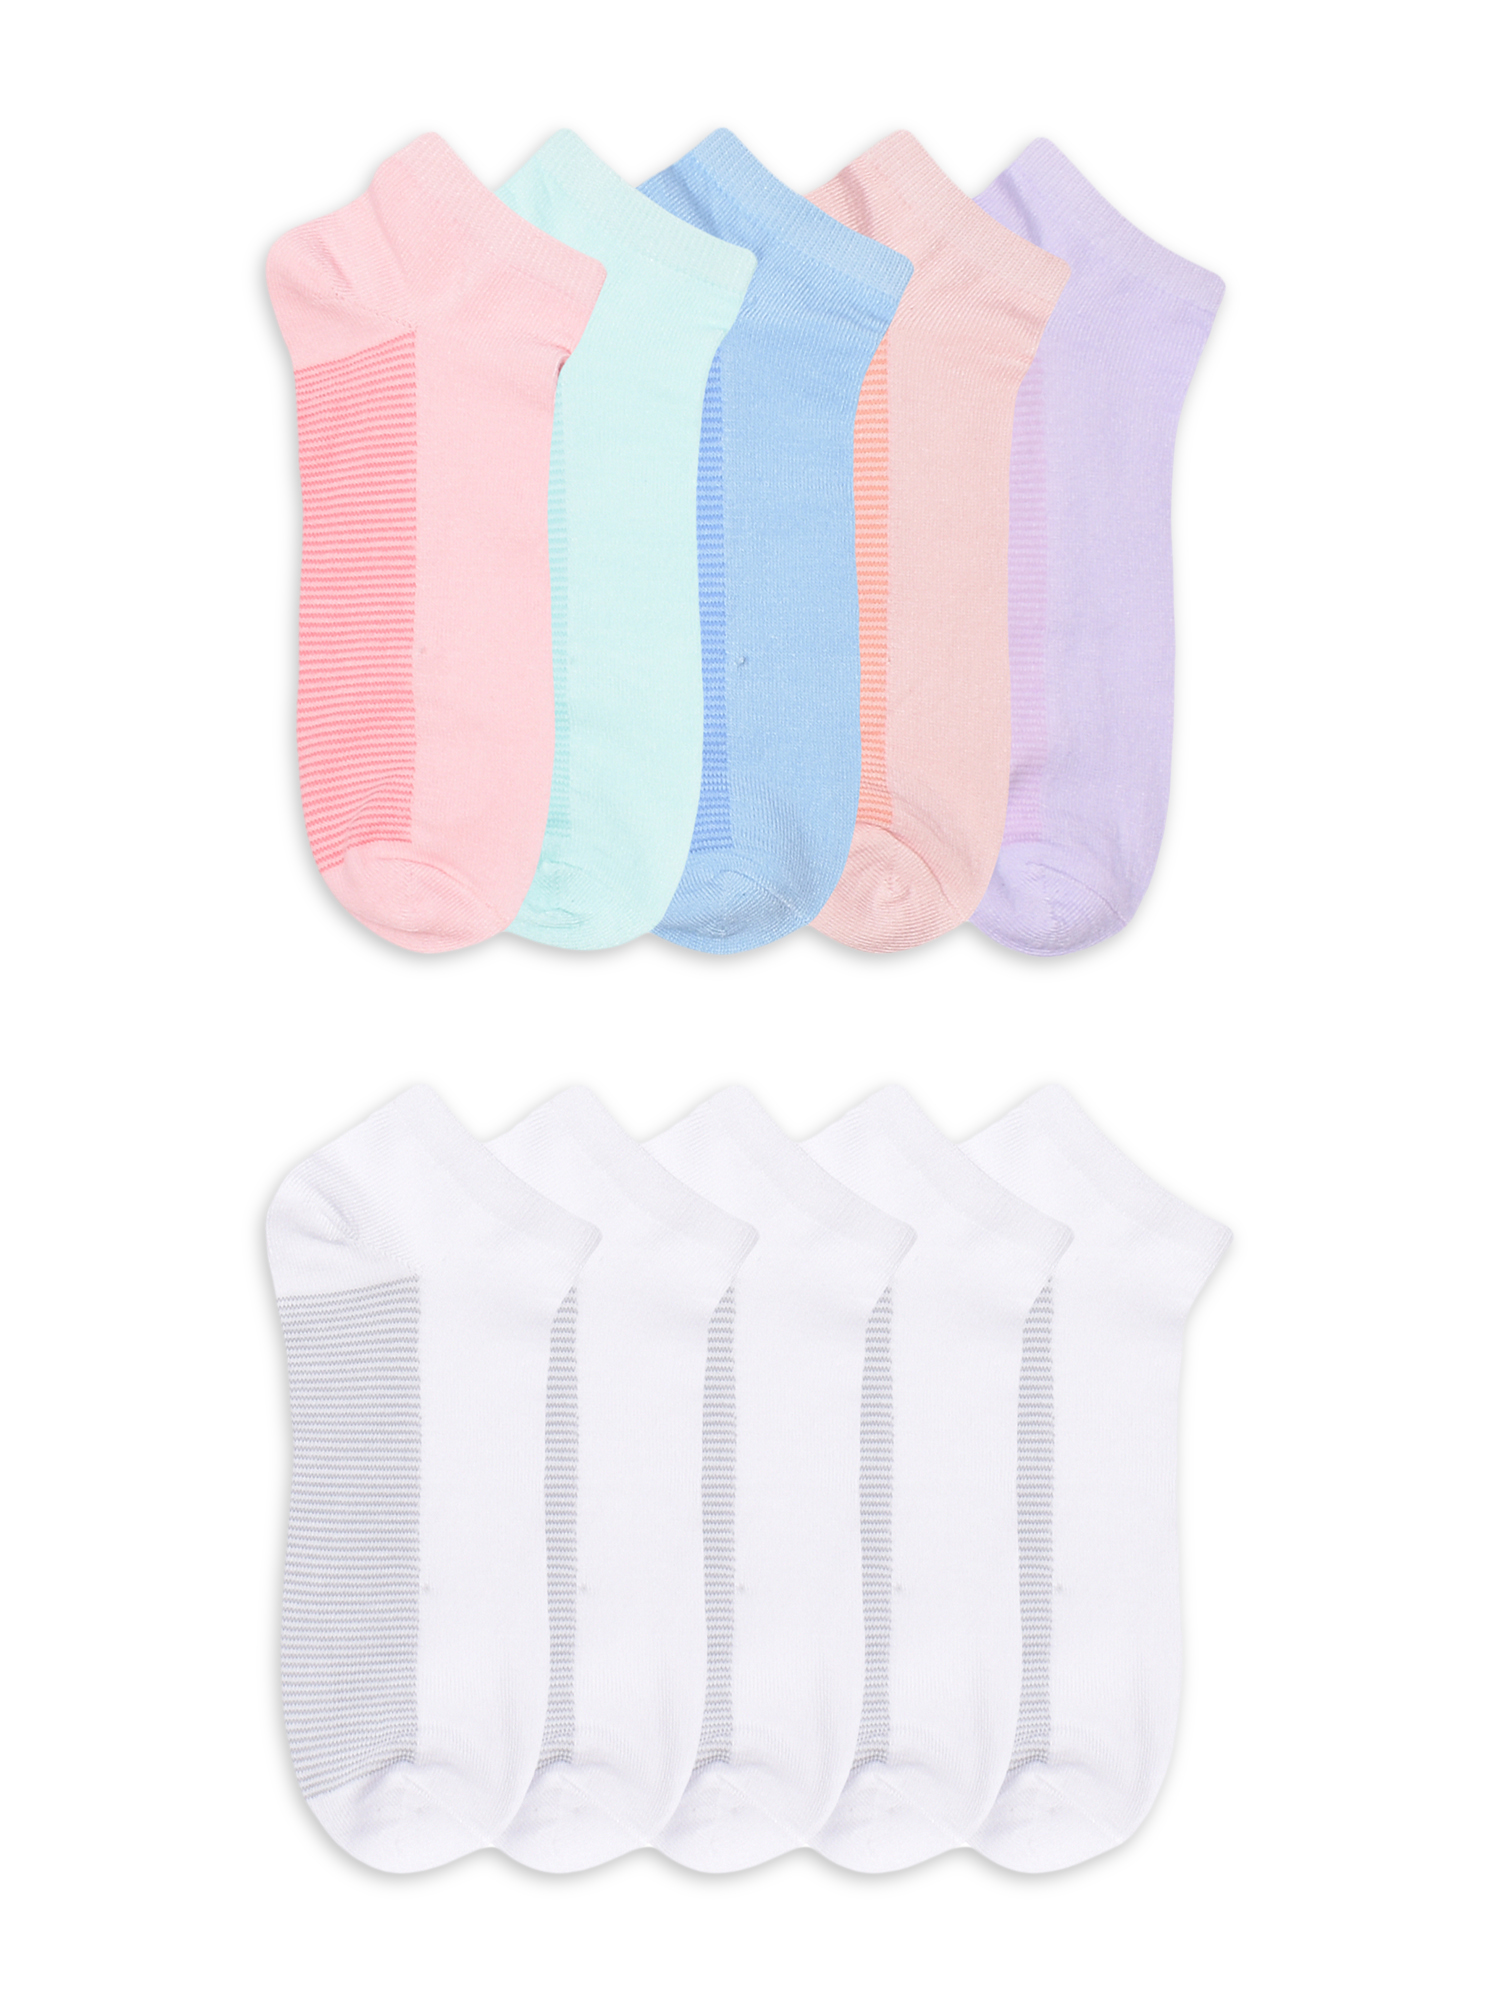 No Boundaries Women's Low-Cut Socks, 10-Pack, Sizes 4-10 - image 1 of 5